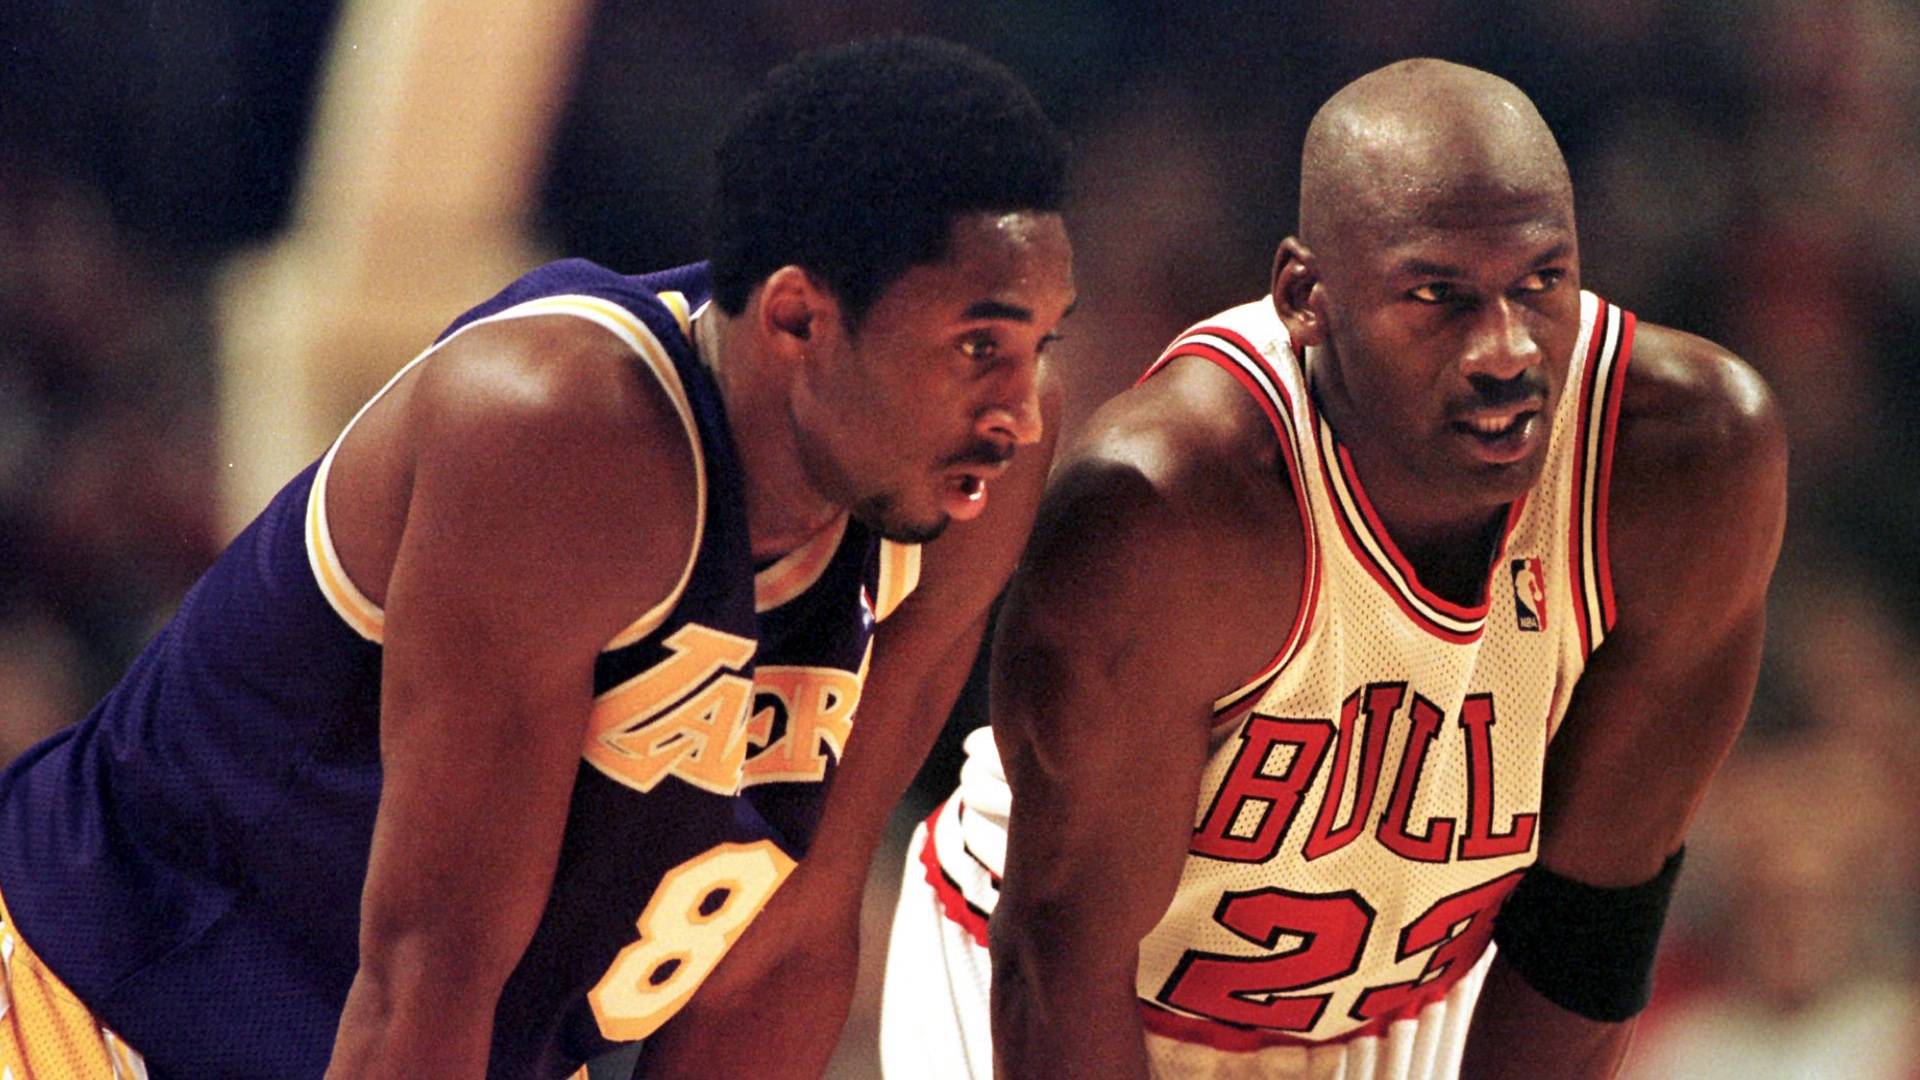 Kobe Bryant and Michael Jordan on BET Buzz 2020.